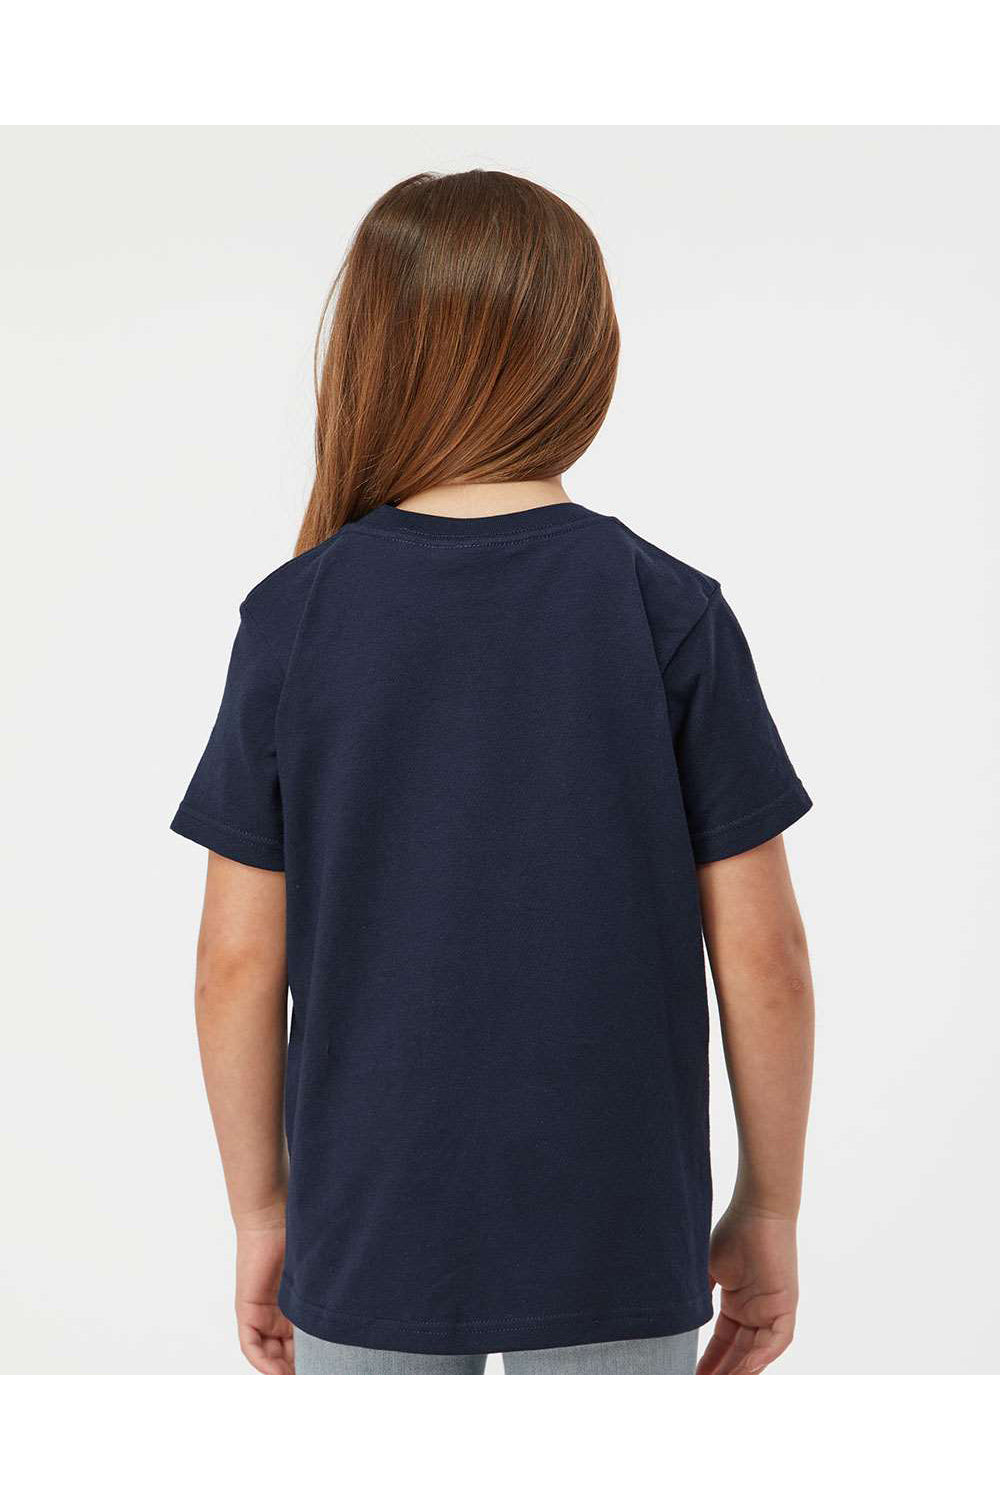 Tultex 235 Youth Fine Jersey Short Sleeve Crewneck T-Shirt Navy Blue Model Back